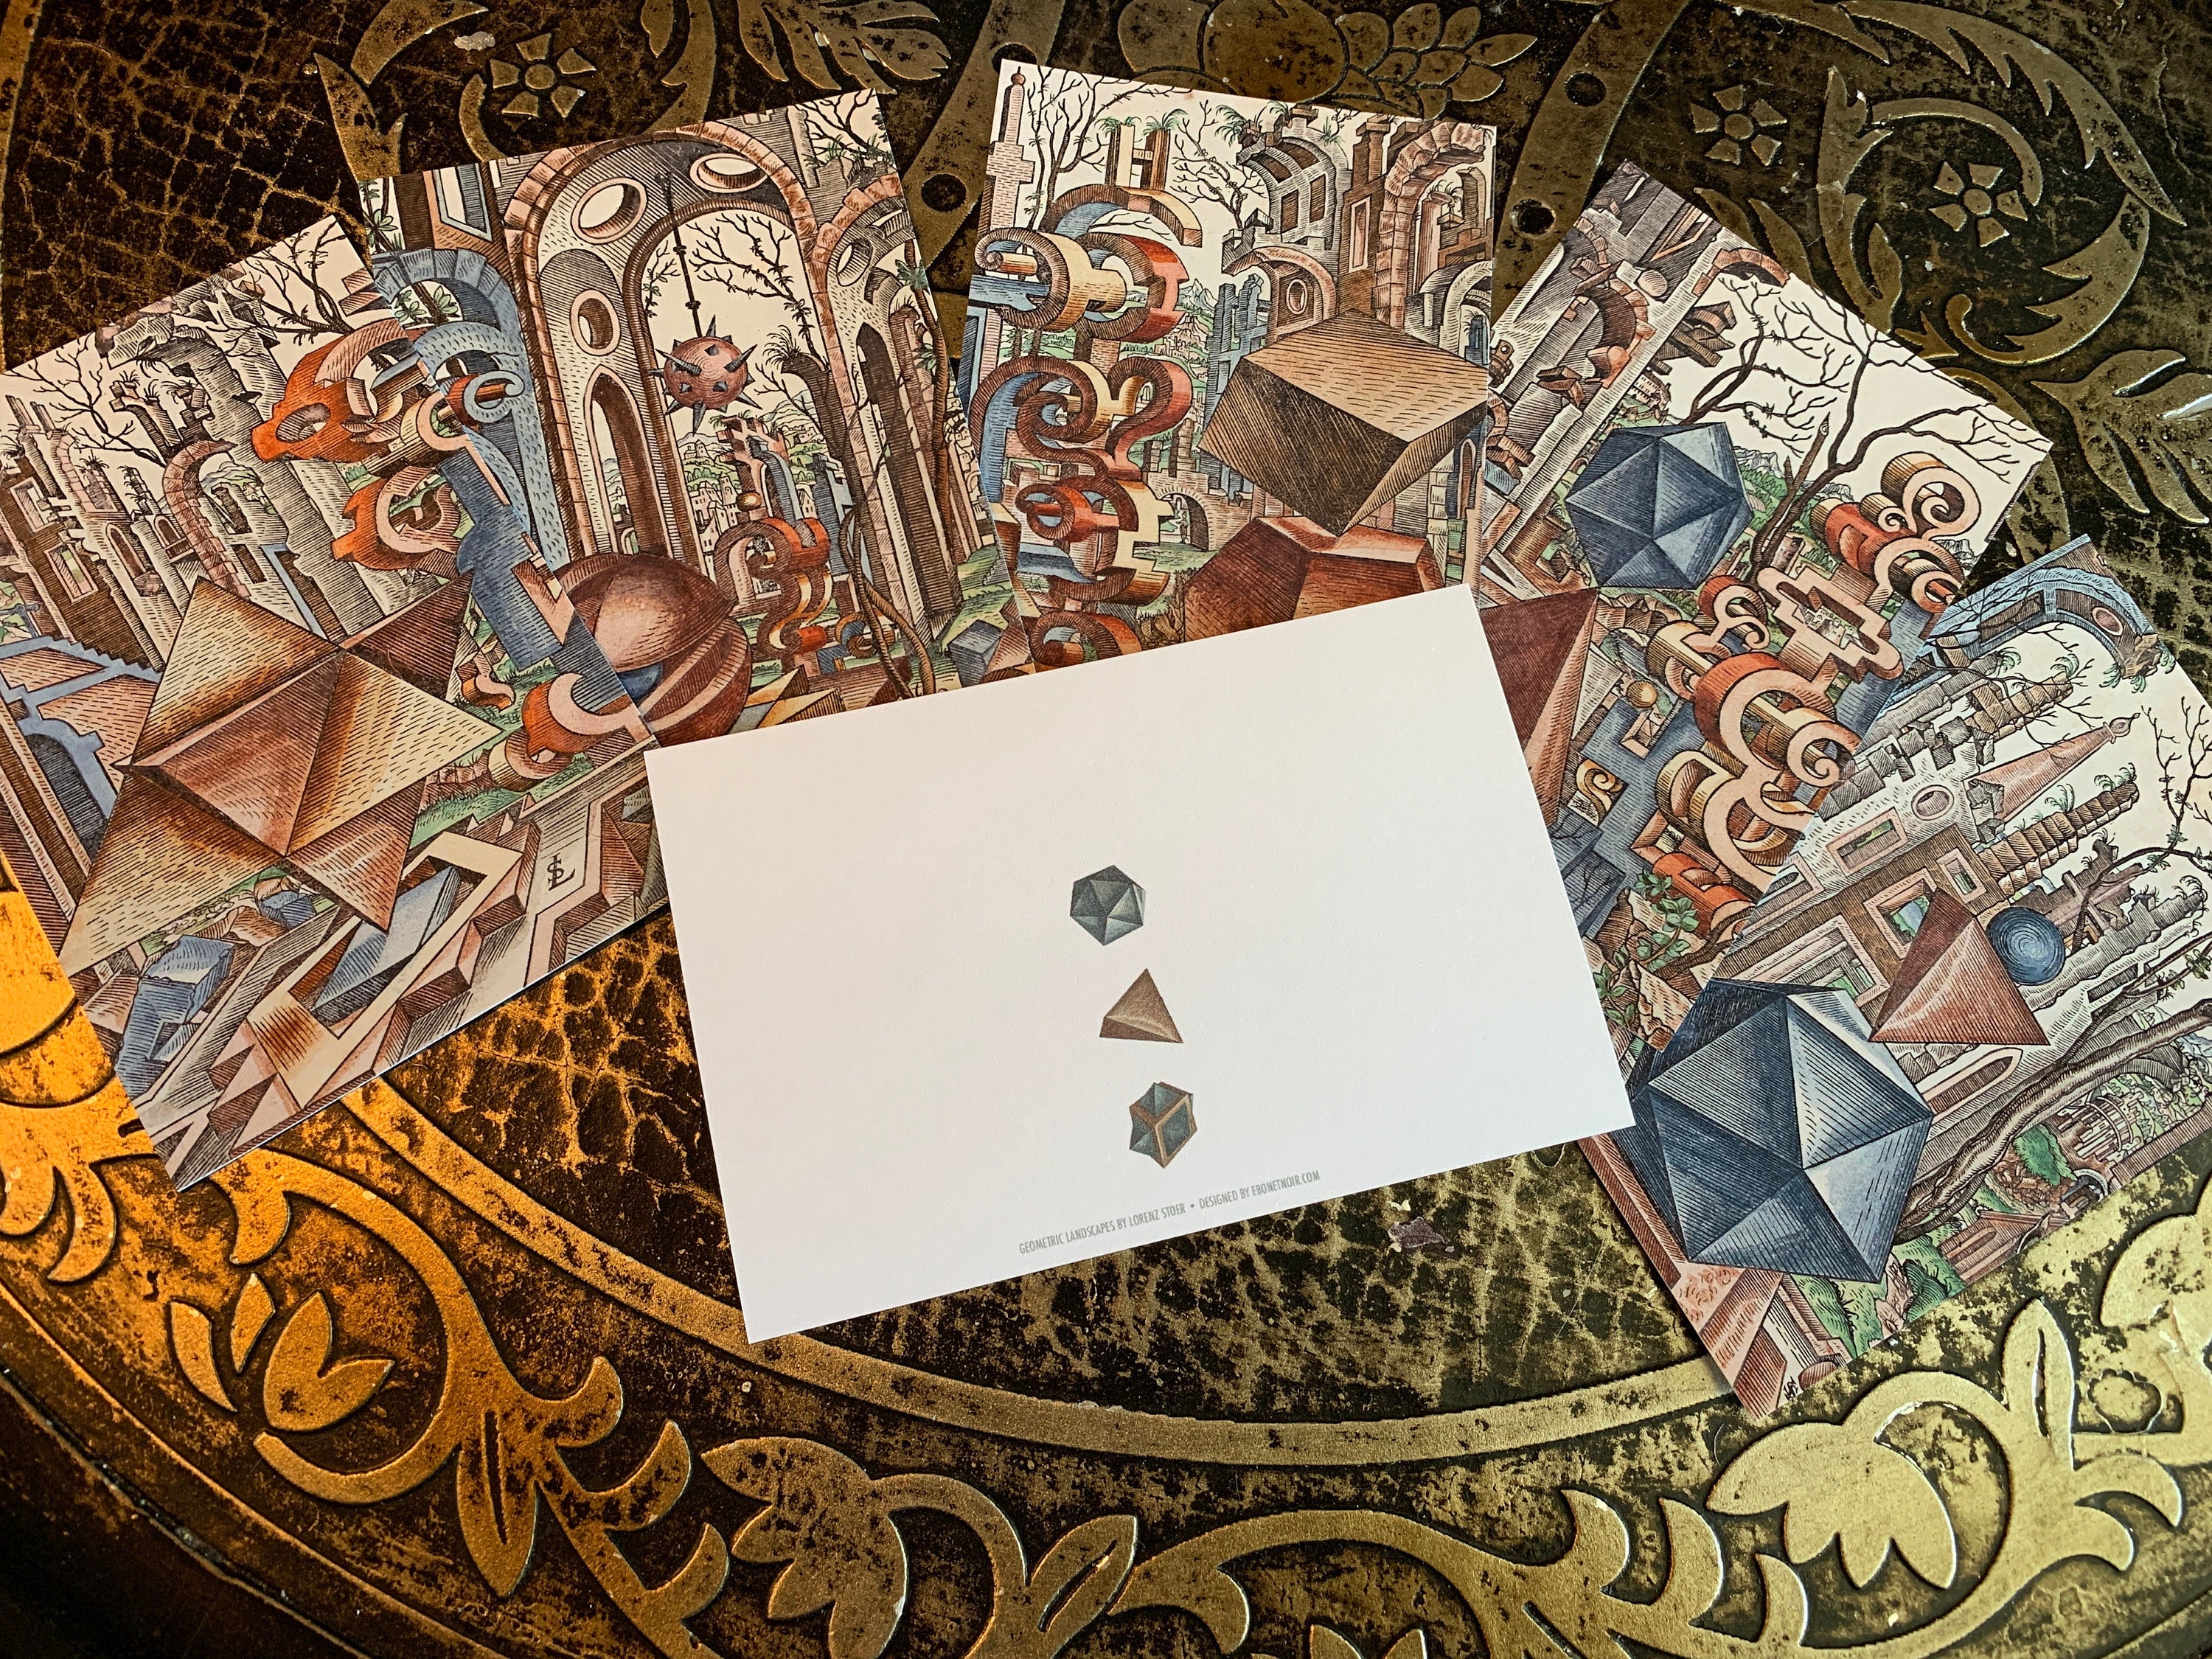 Geometric Landscapes of Lorenz Stoer, Everyday Postcards, 6 Designs, 12 Cards